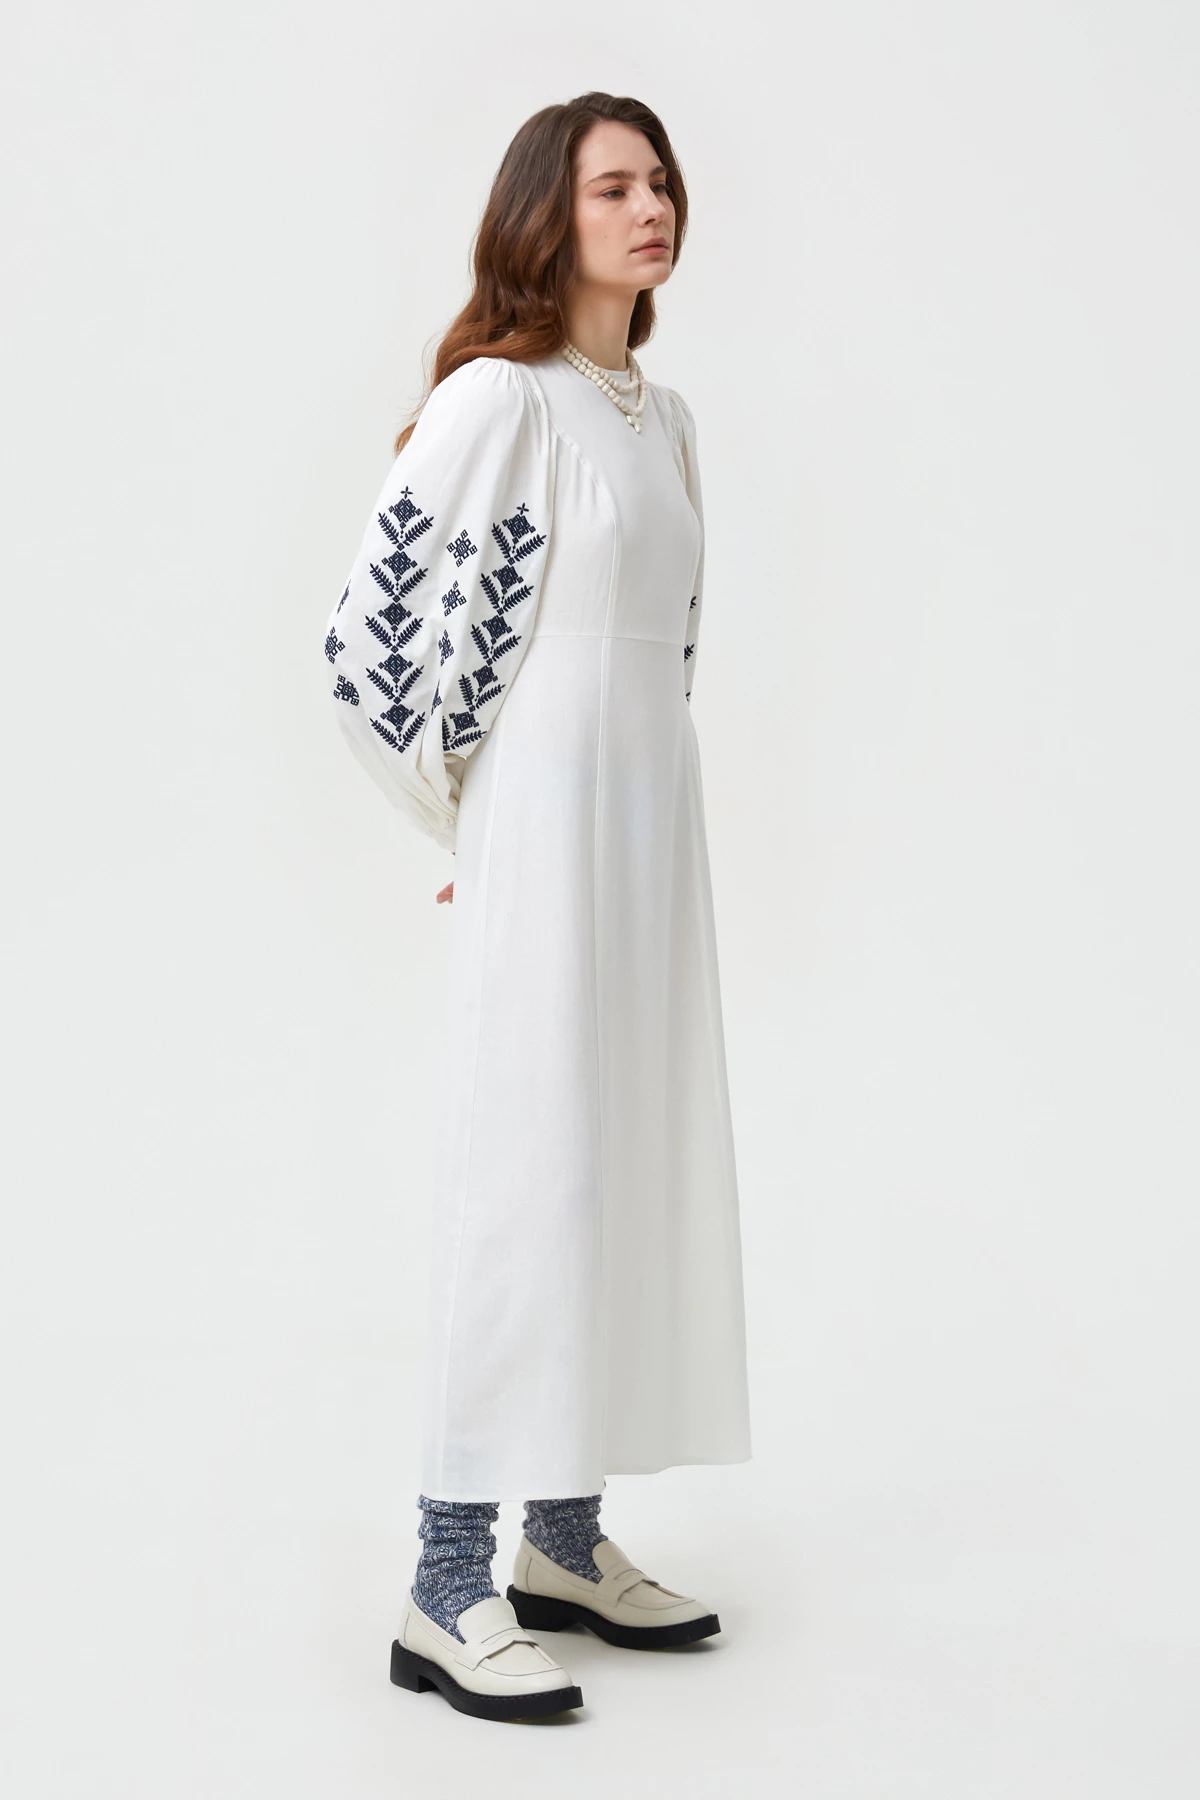 Milky linen vyshyvanka dress with rhombus embroidery, photo 1